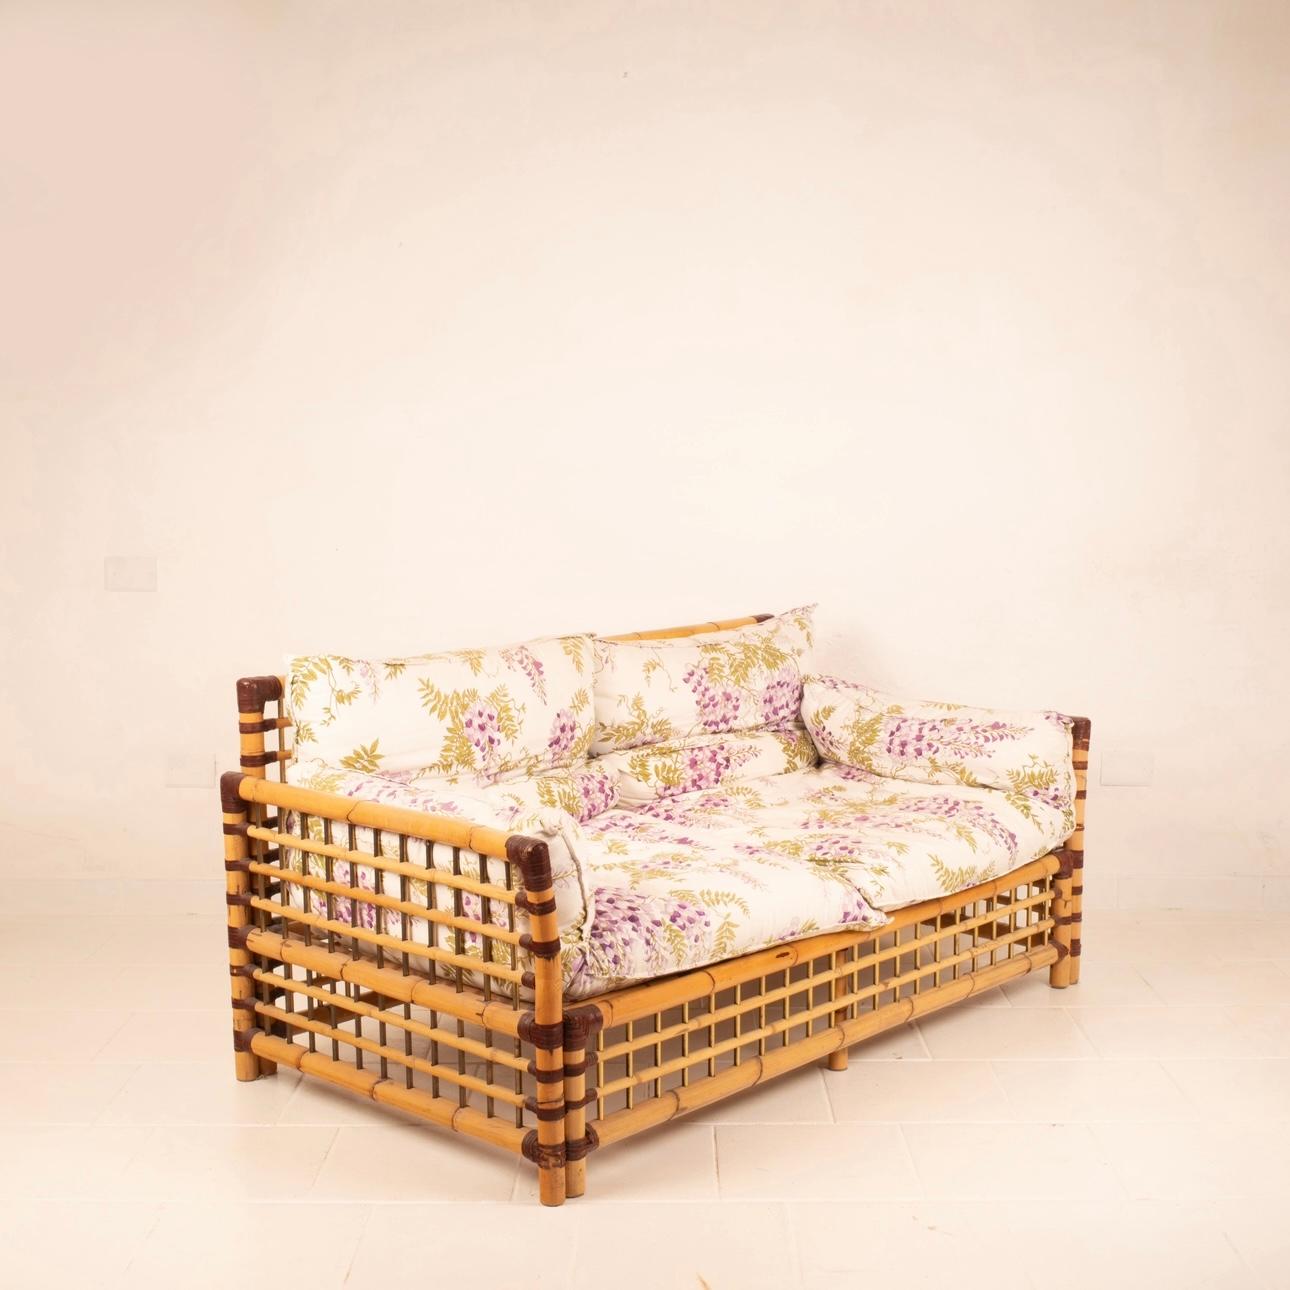 Extraordinary and very rare sofa belonging to the 